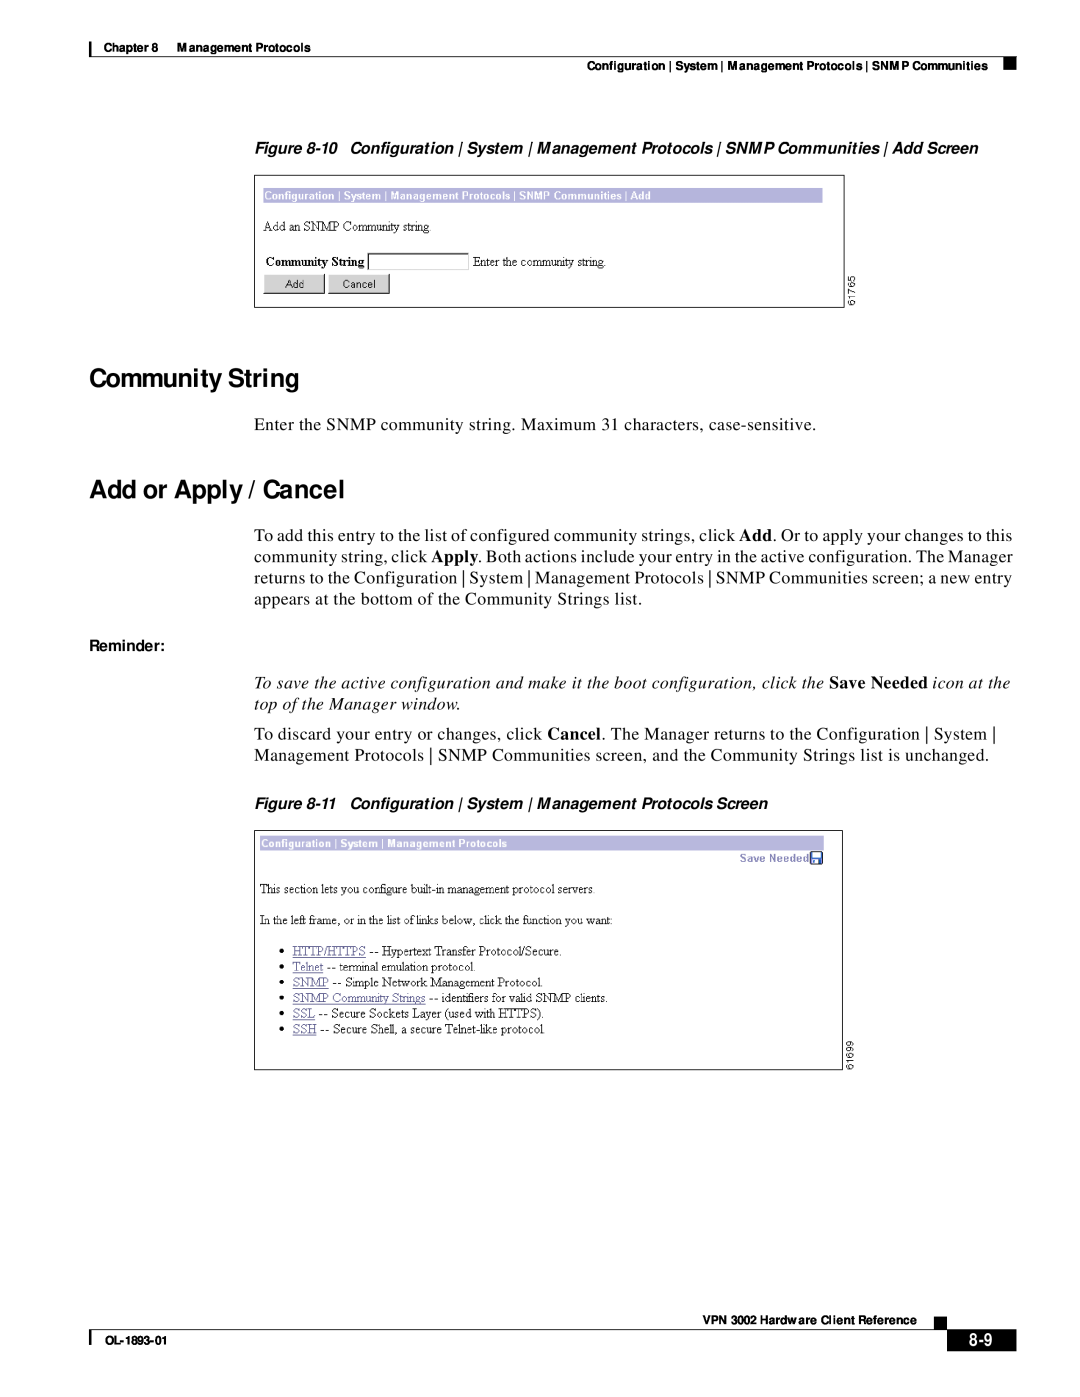 Cisco Systems VPN 3002 manual Community String, Add or Apply / Cancel, Reminder 